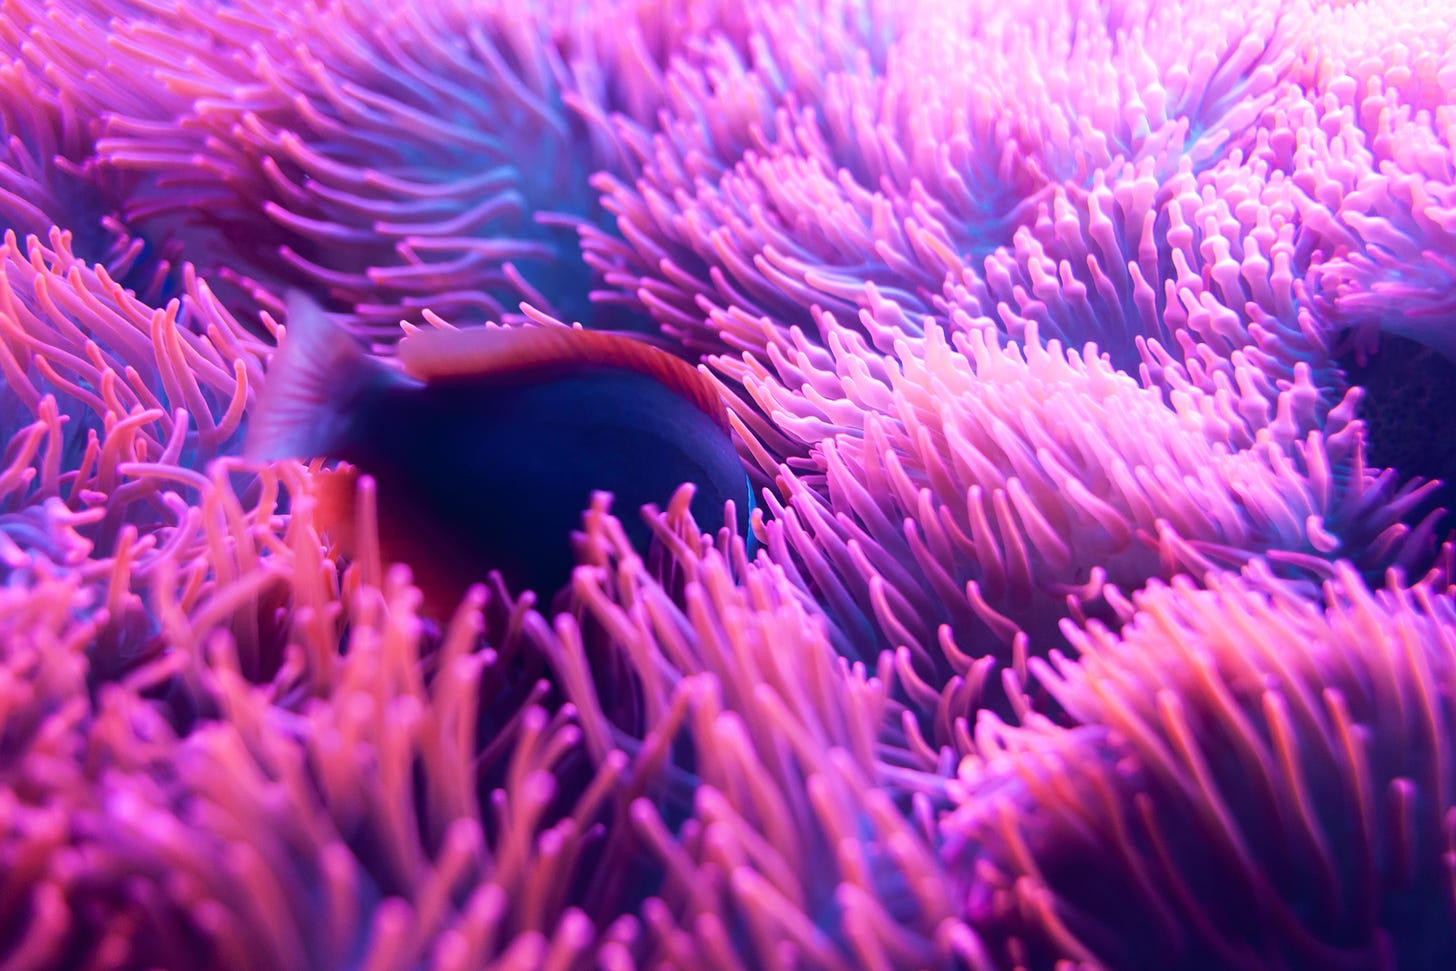 A fish swimming in purple fingers of sea anemones